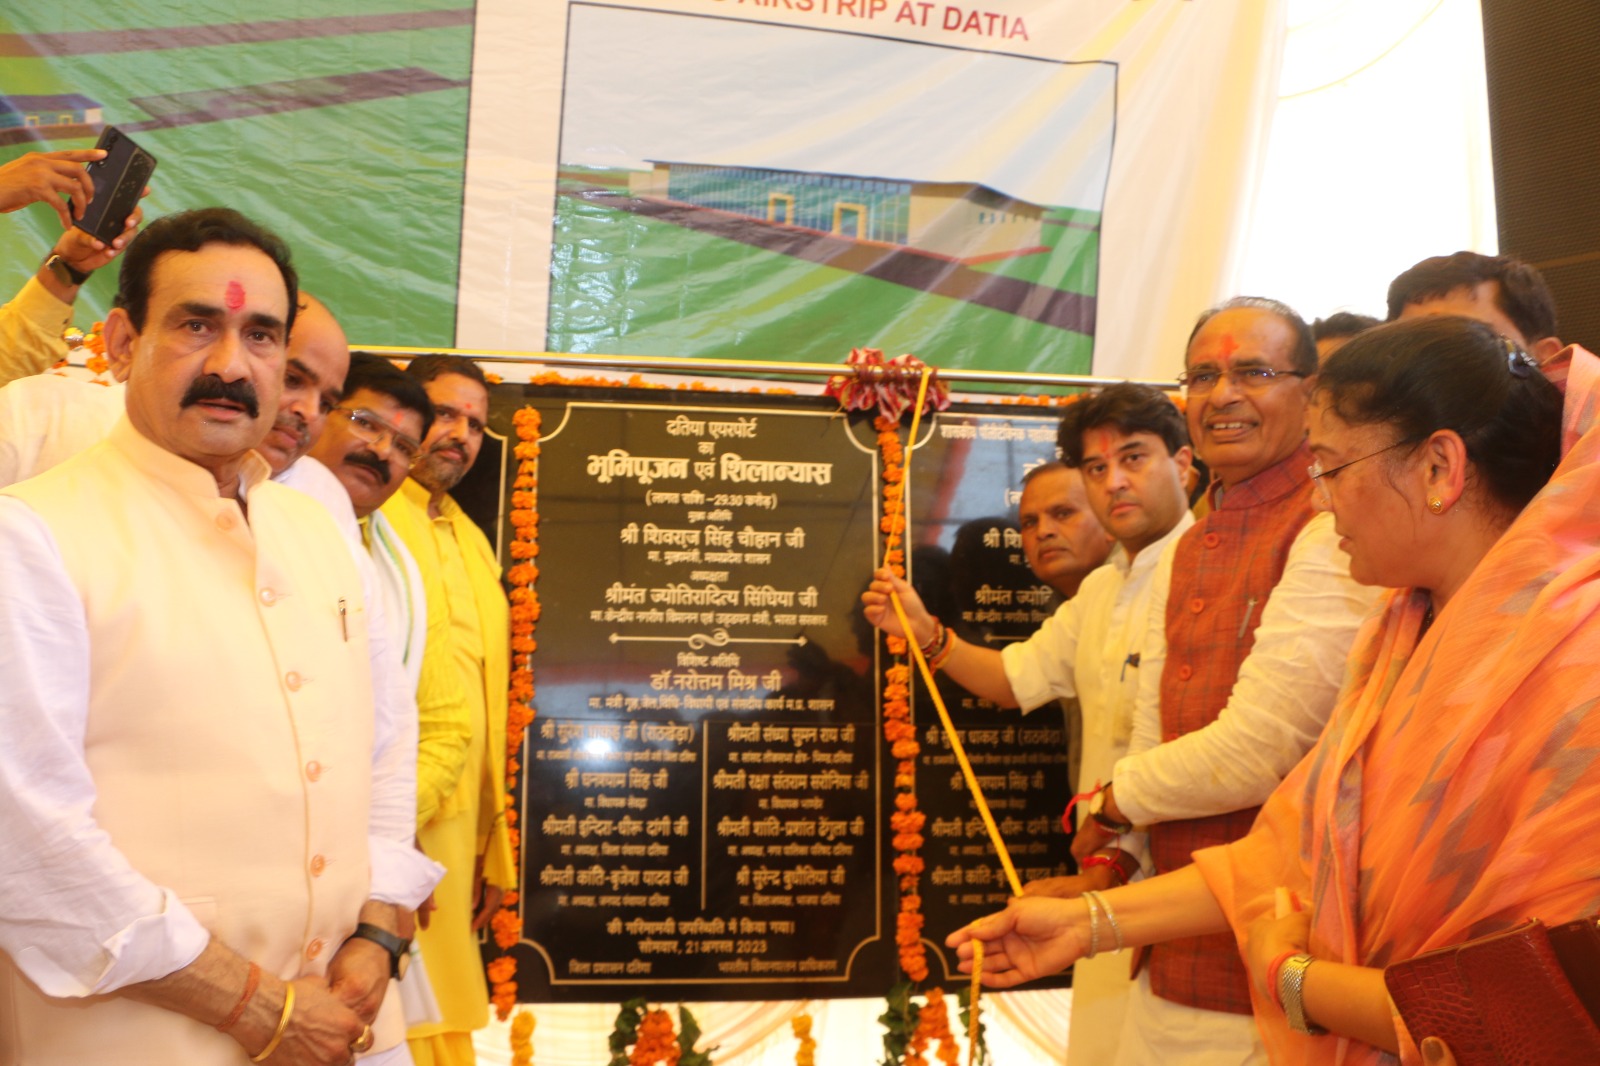 Chief Minister of Madhya Pradesh, Shri Shivraj Singh Chouhan, and Union Minister of Civil Aviation and Steel, Shri Jyotiraditya M. Scindia, laid the foundation stone of Datia Airport in Madhya Pradesh today.